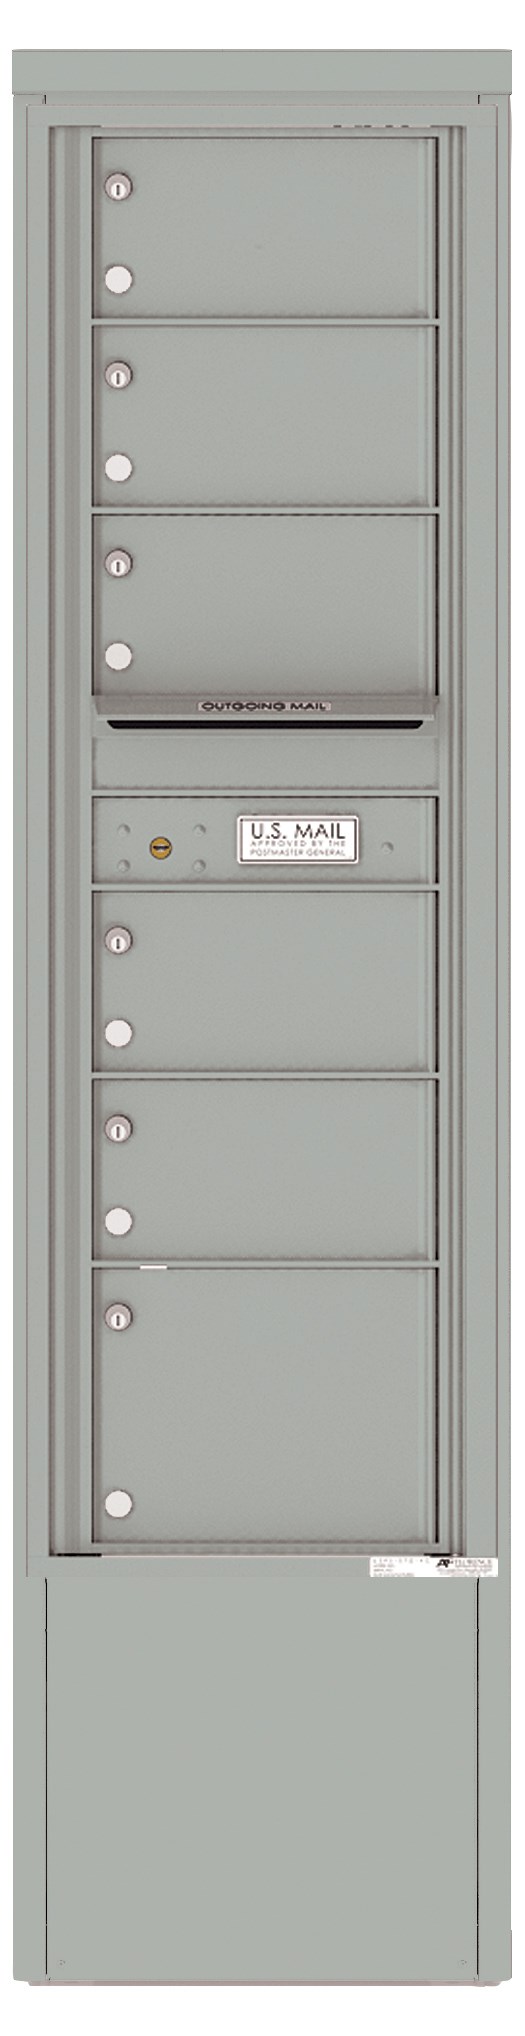 4C15S-06-D 4C Horizontal Depot Mailbox Silver Speck